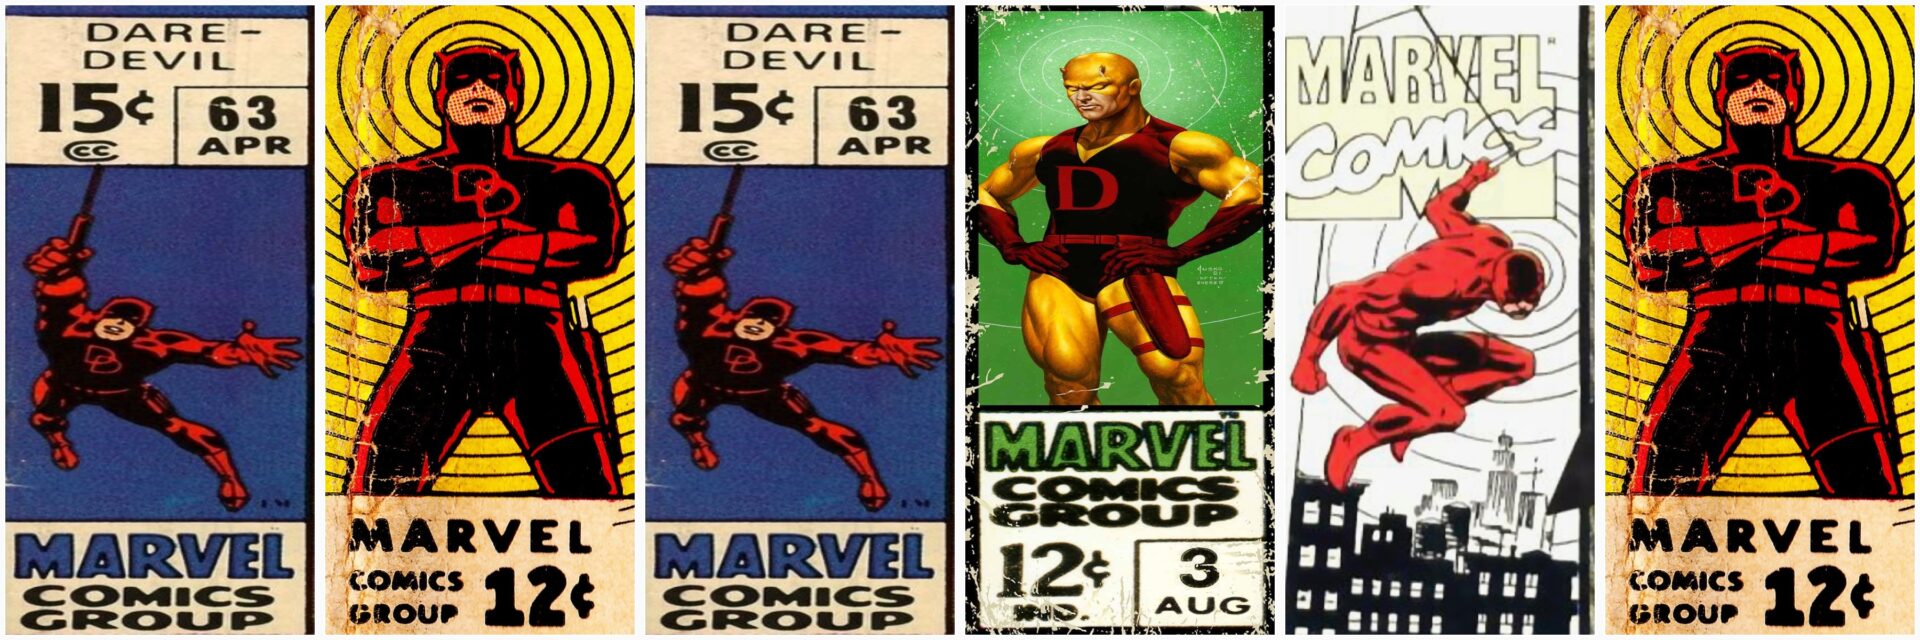 Daredevil #219 (1985): Frank Miller returns